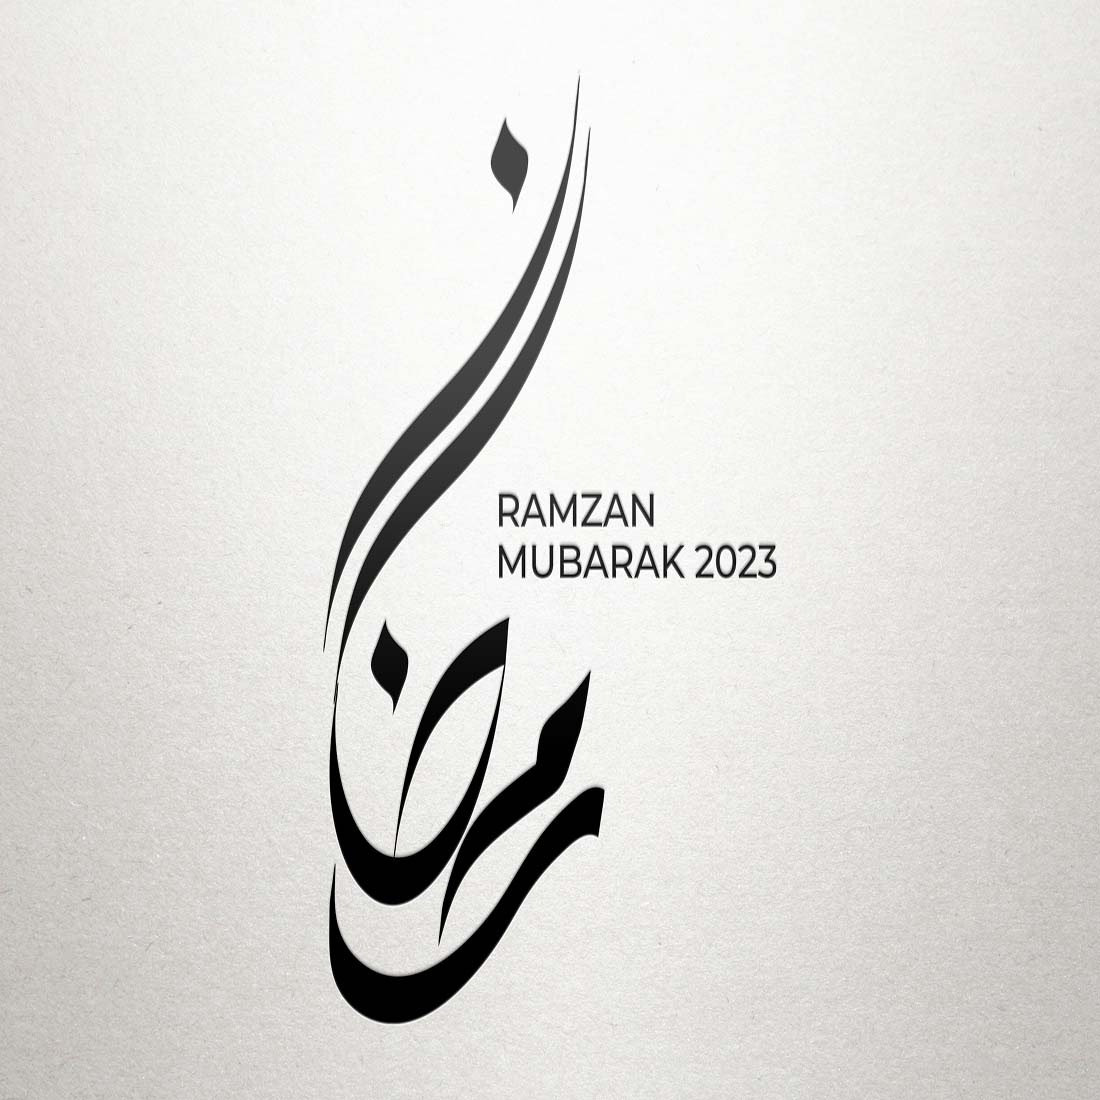 Ramadan Kareem 2023 illustration & Calligraphy preview image.